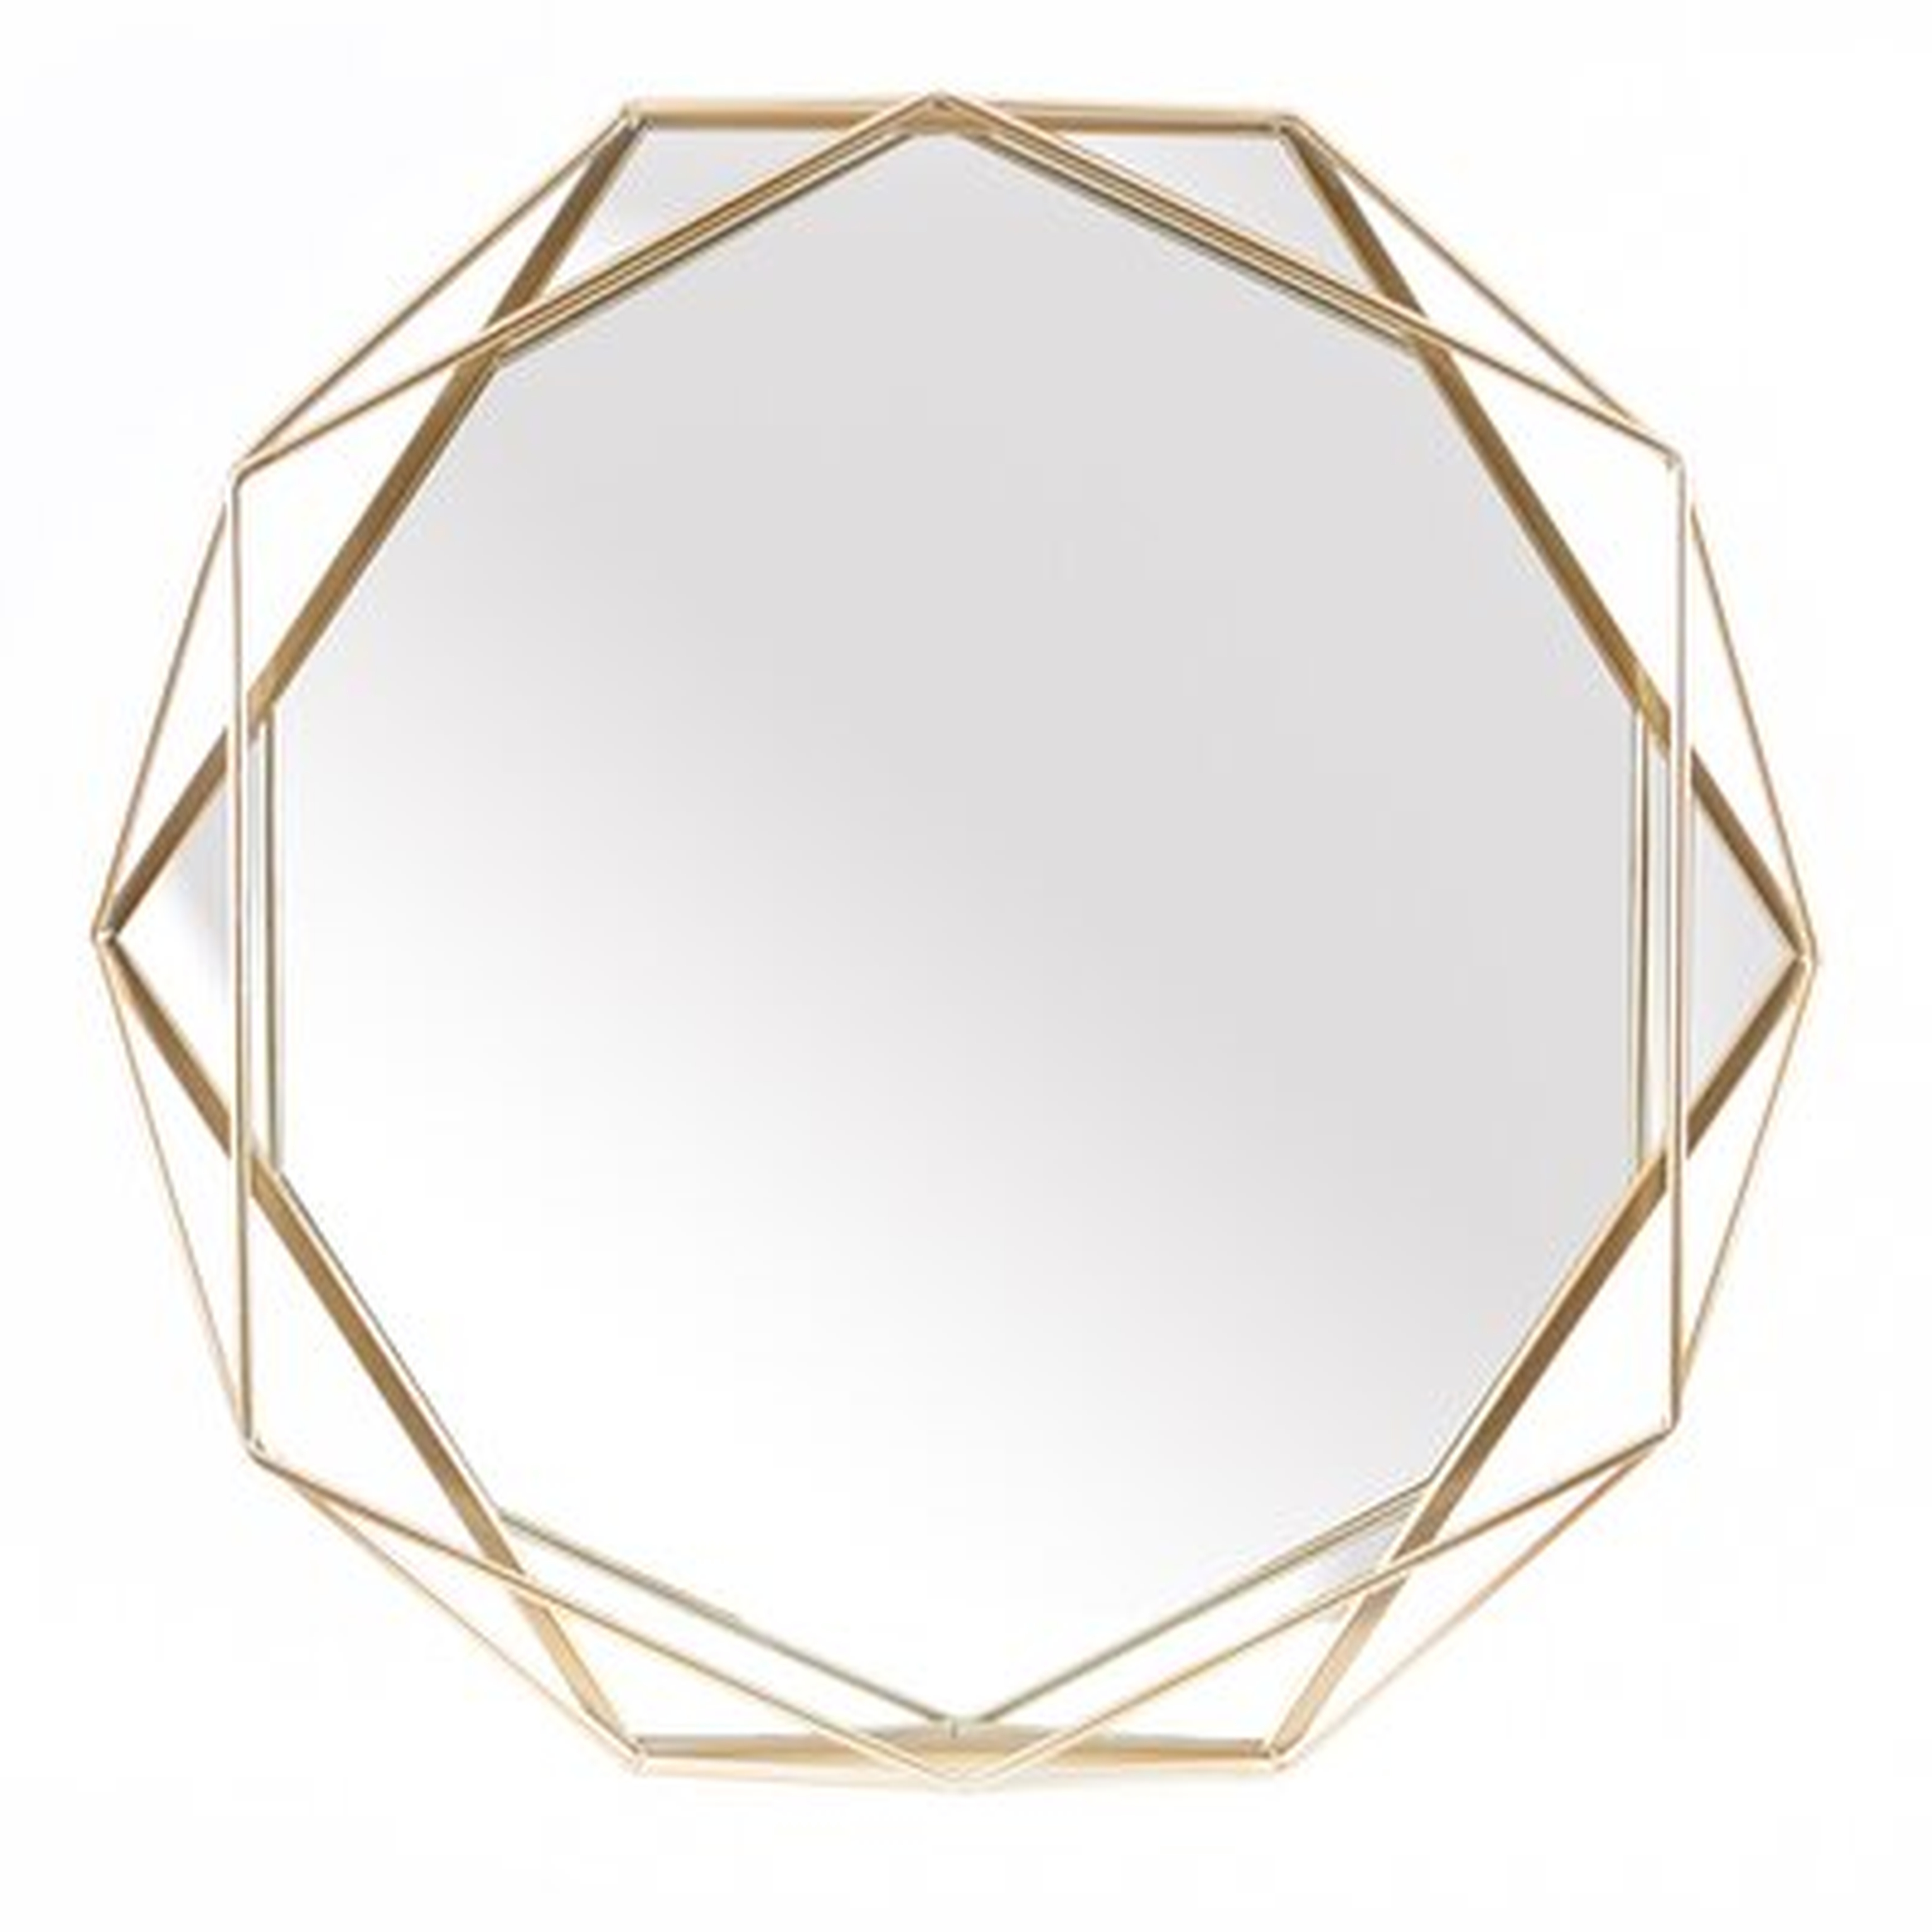 Metal Octagonal Frame Wall Mirror, Gold - Wayfair